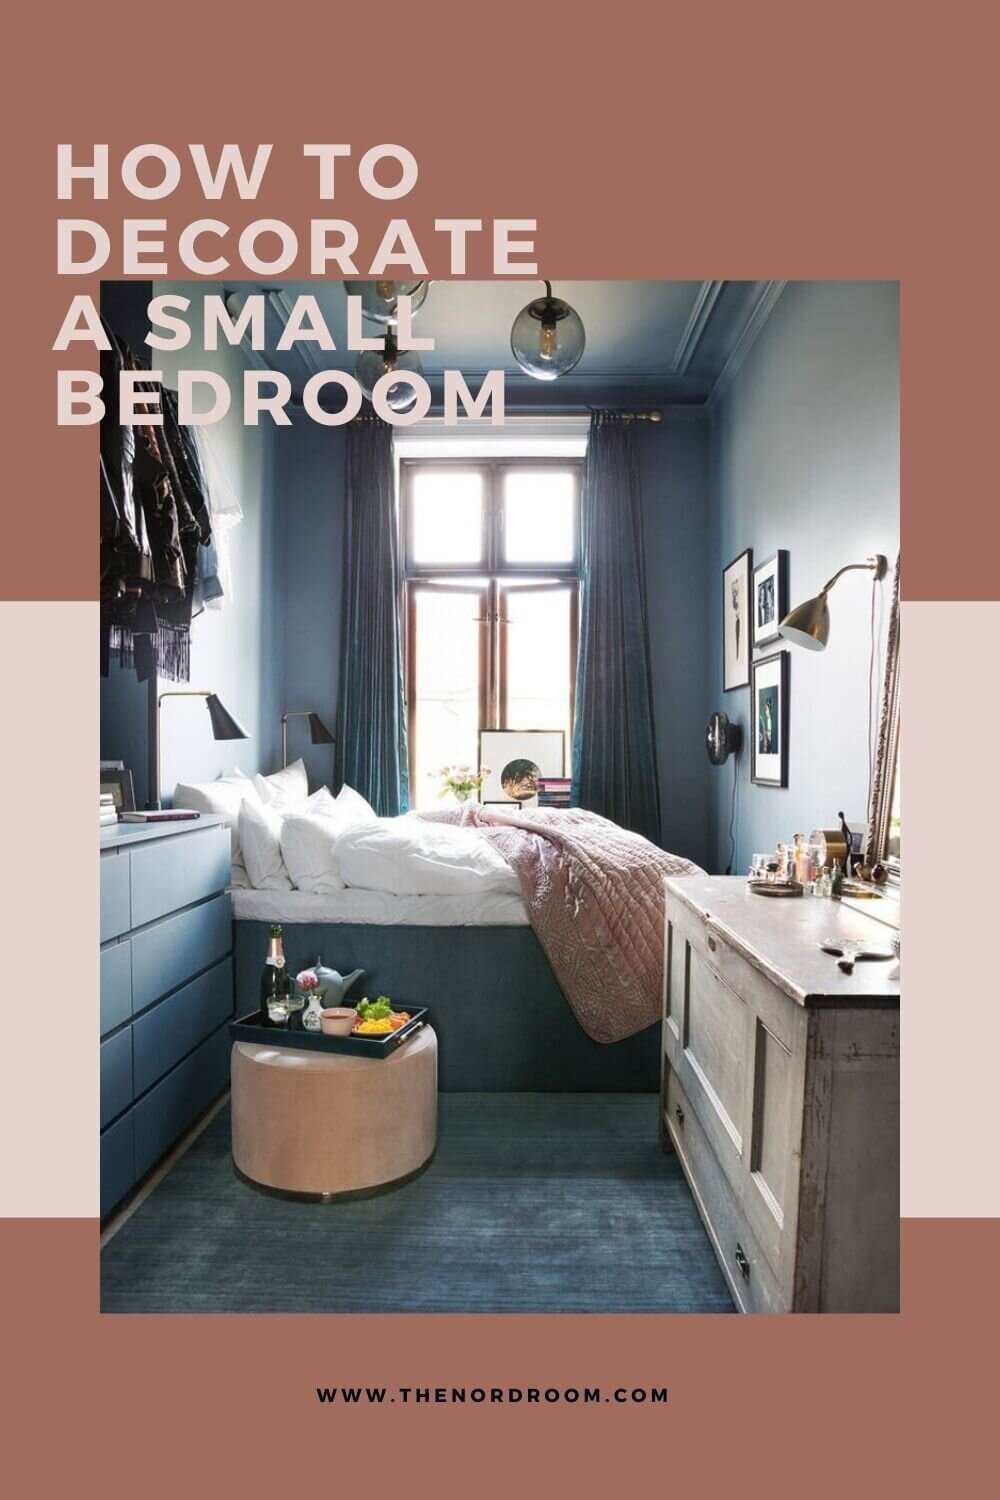 Small Bedroom Decorating Ideas